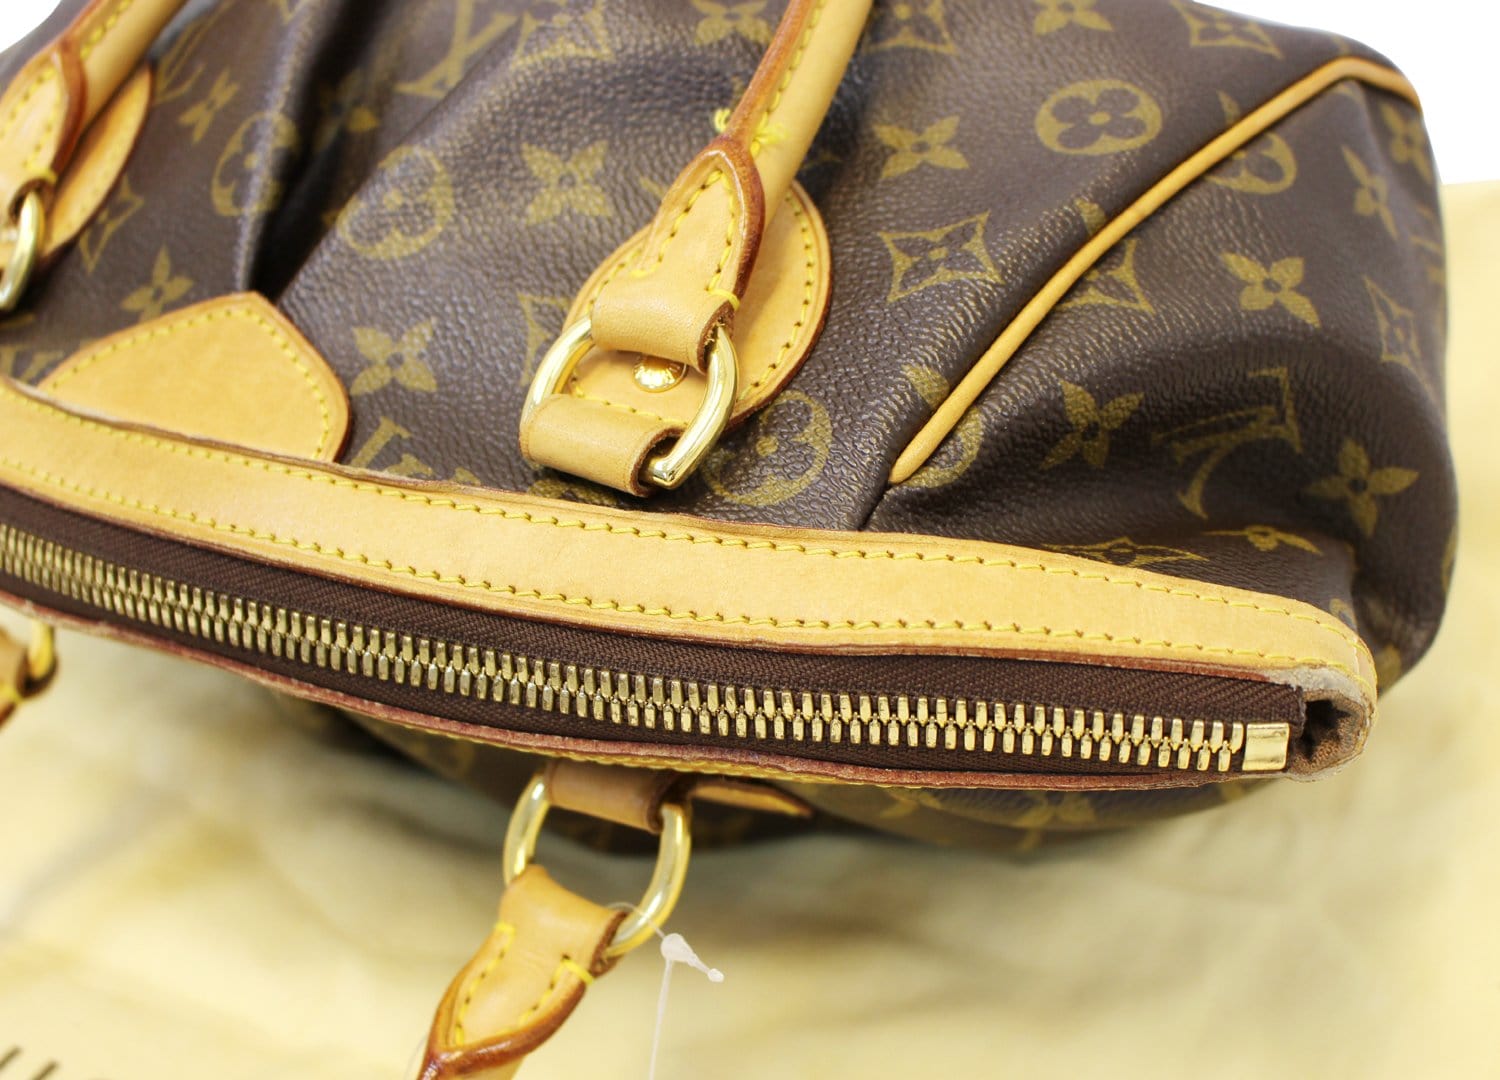 3ae5123] Louis Vuitton Handbag Monogram Tivoli Pm M40143 Auction